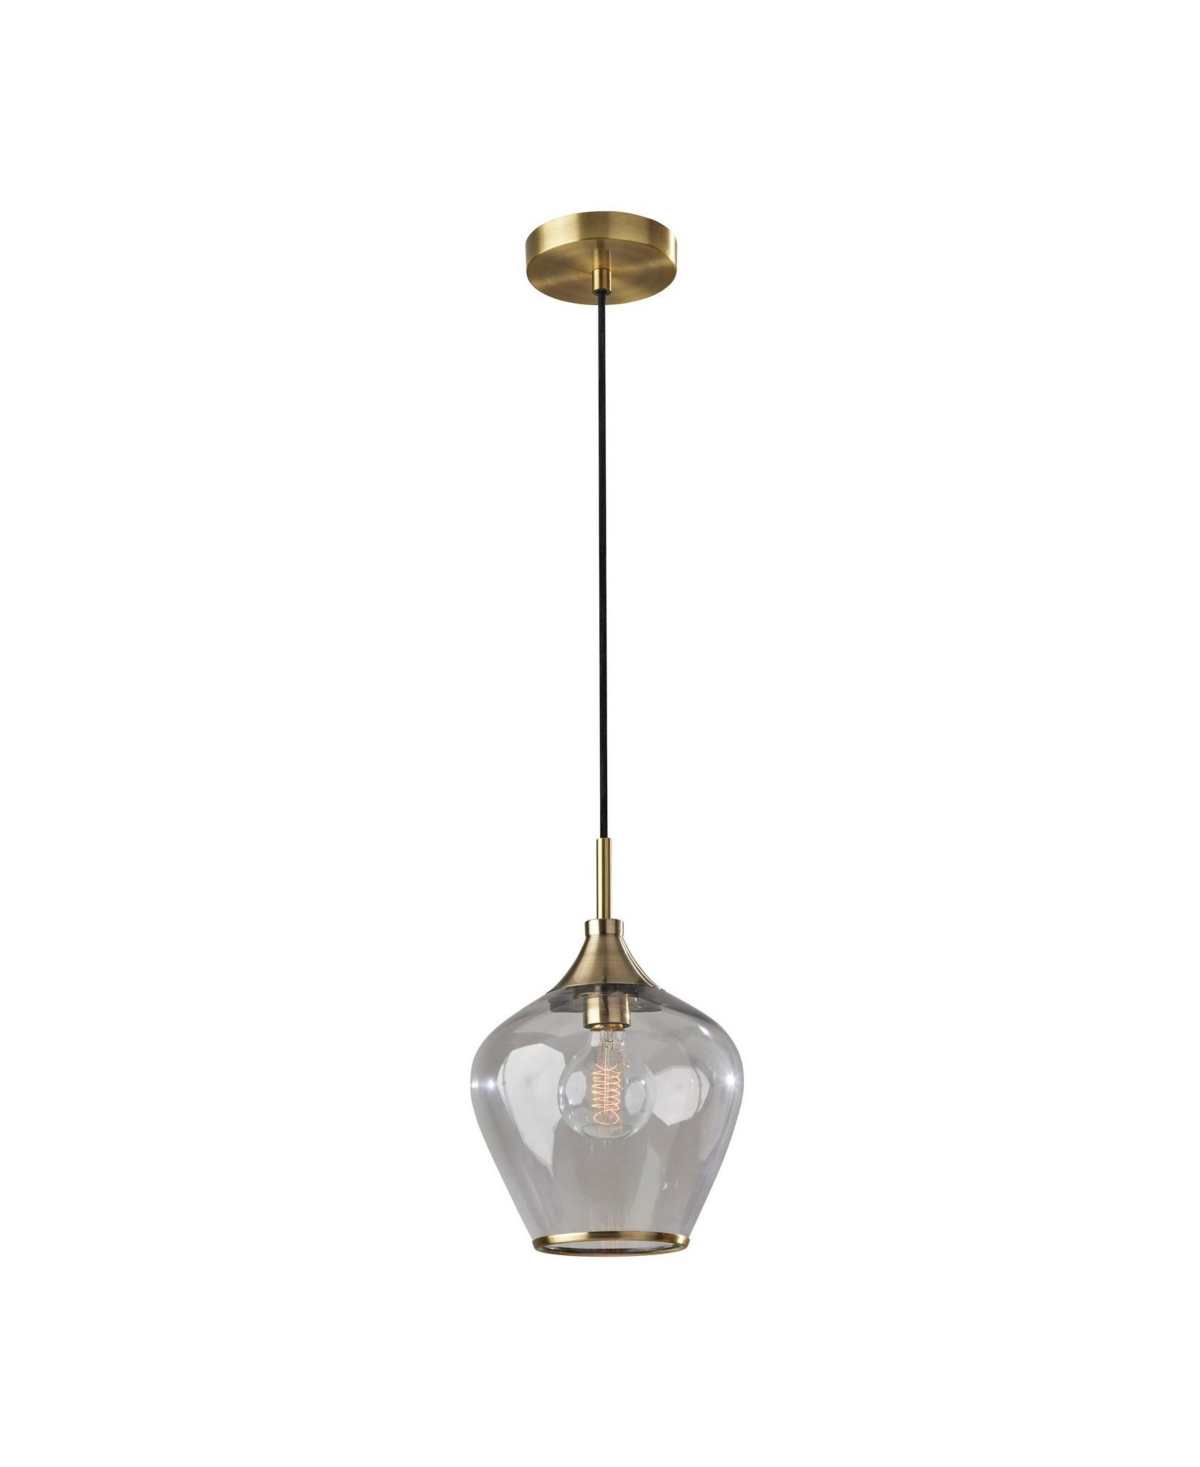 Adesso Bradford Pendant Lamp In Antique-like Brass